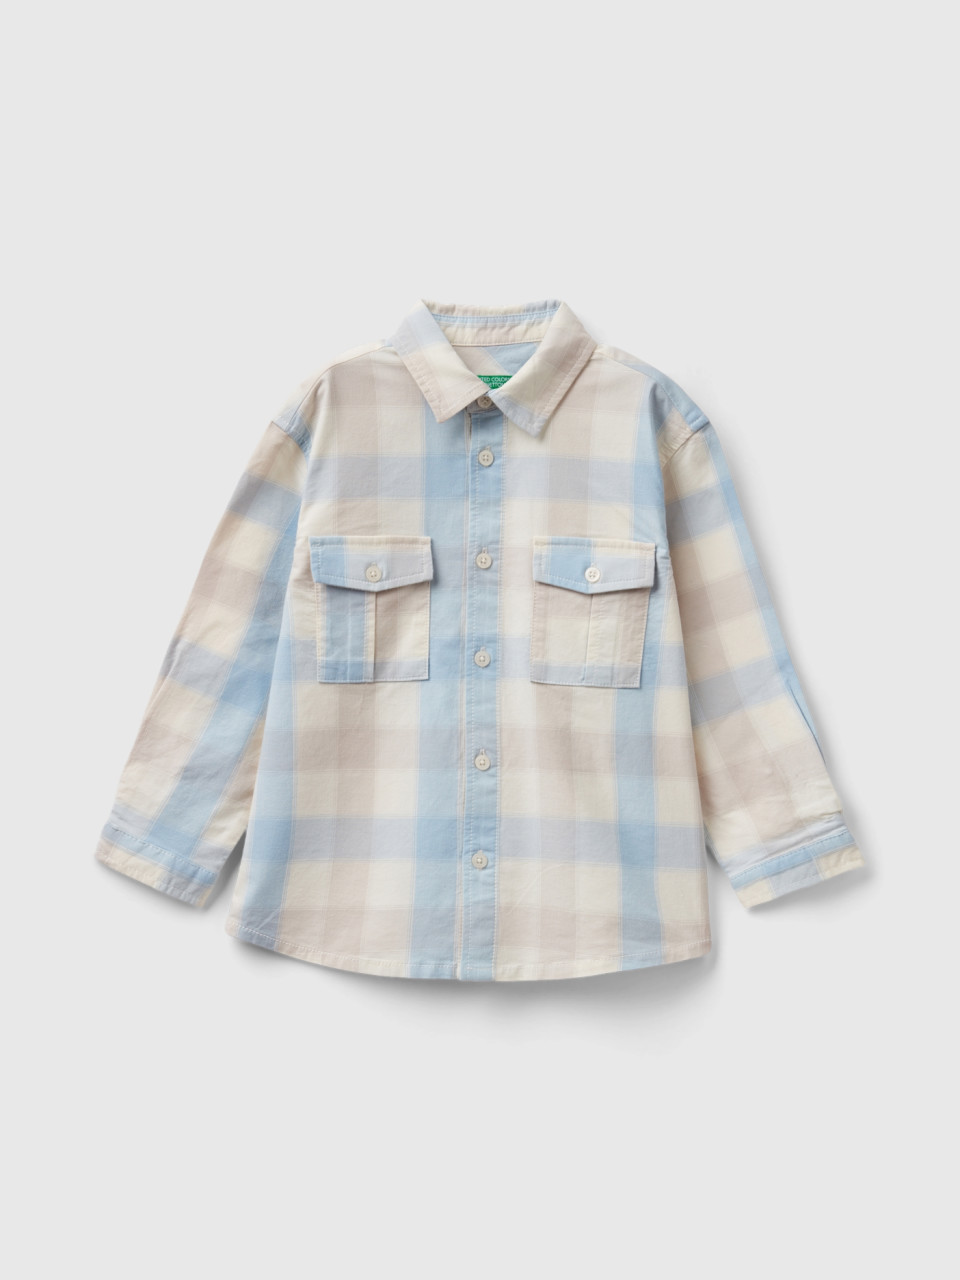 Benetton, Check Shirt In Stretch Cotton, Multi-color, Kids